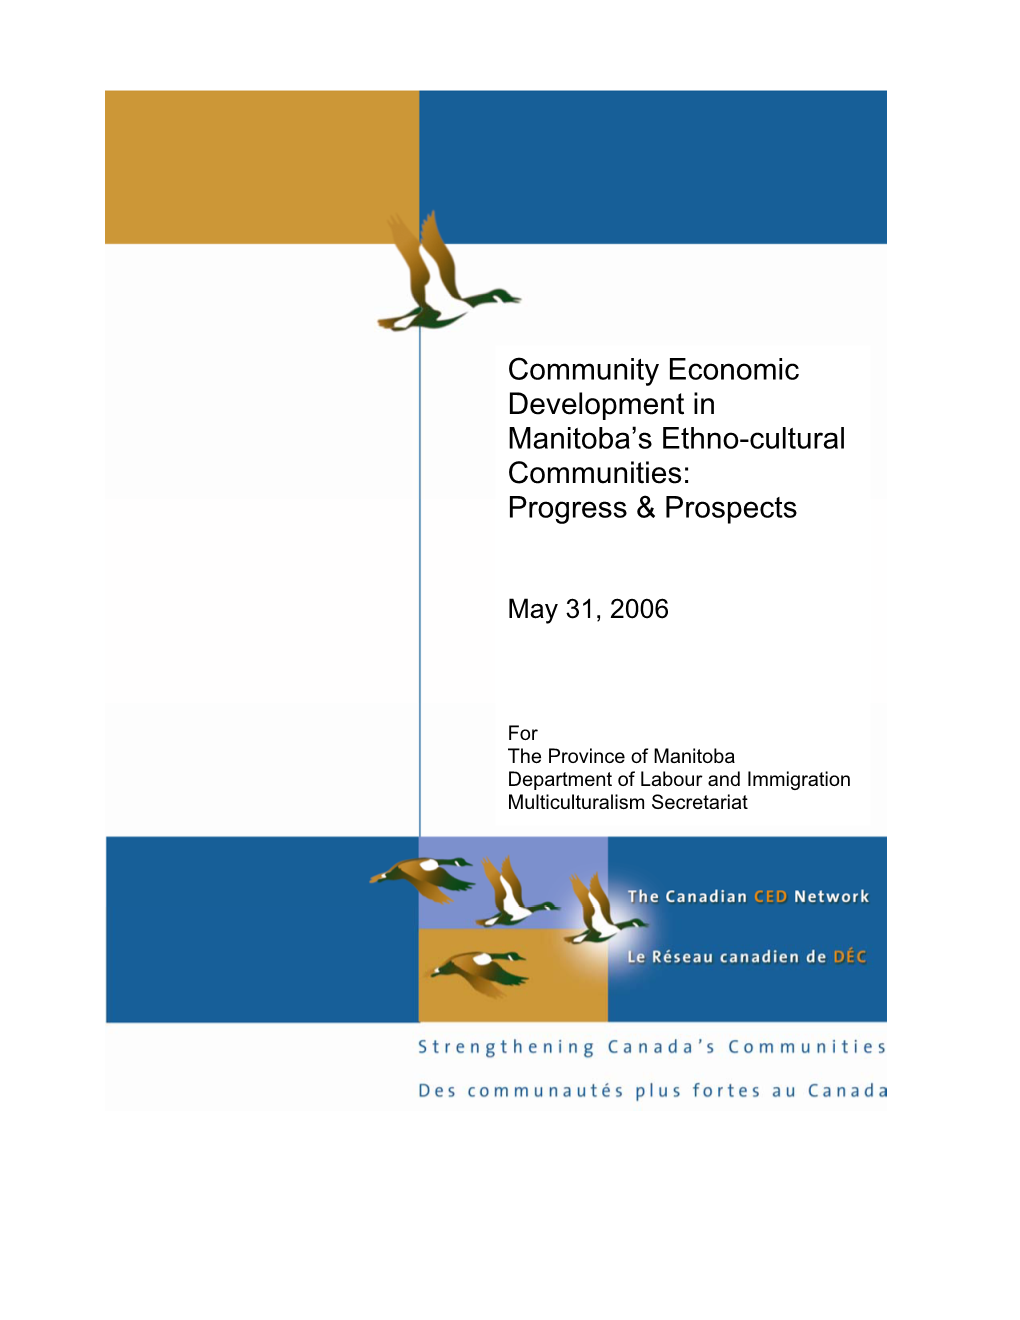 Community Economic Development in Manitoba's Ethno-Cultural Communities